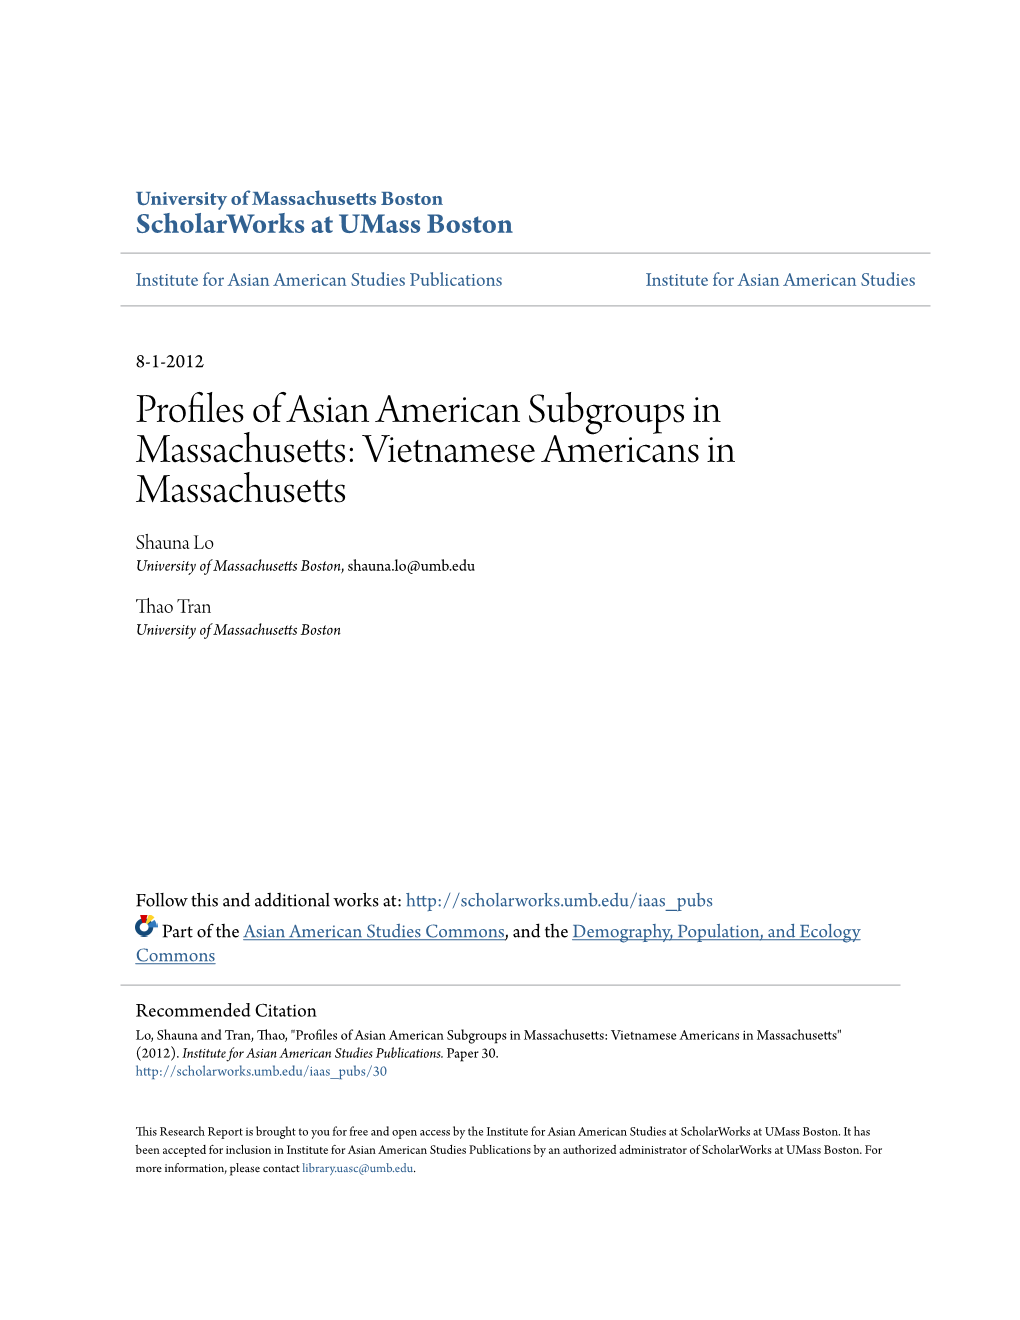 Vietnamese Americans in Massachusetts Shauna Lo University of Massachusetts Boston, Shauna.Lo@Umb.Edu